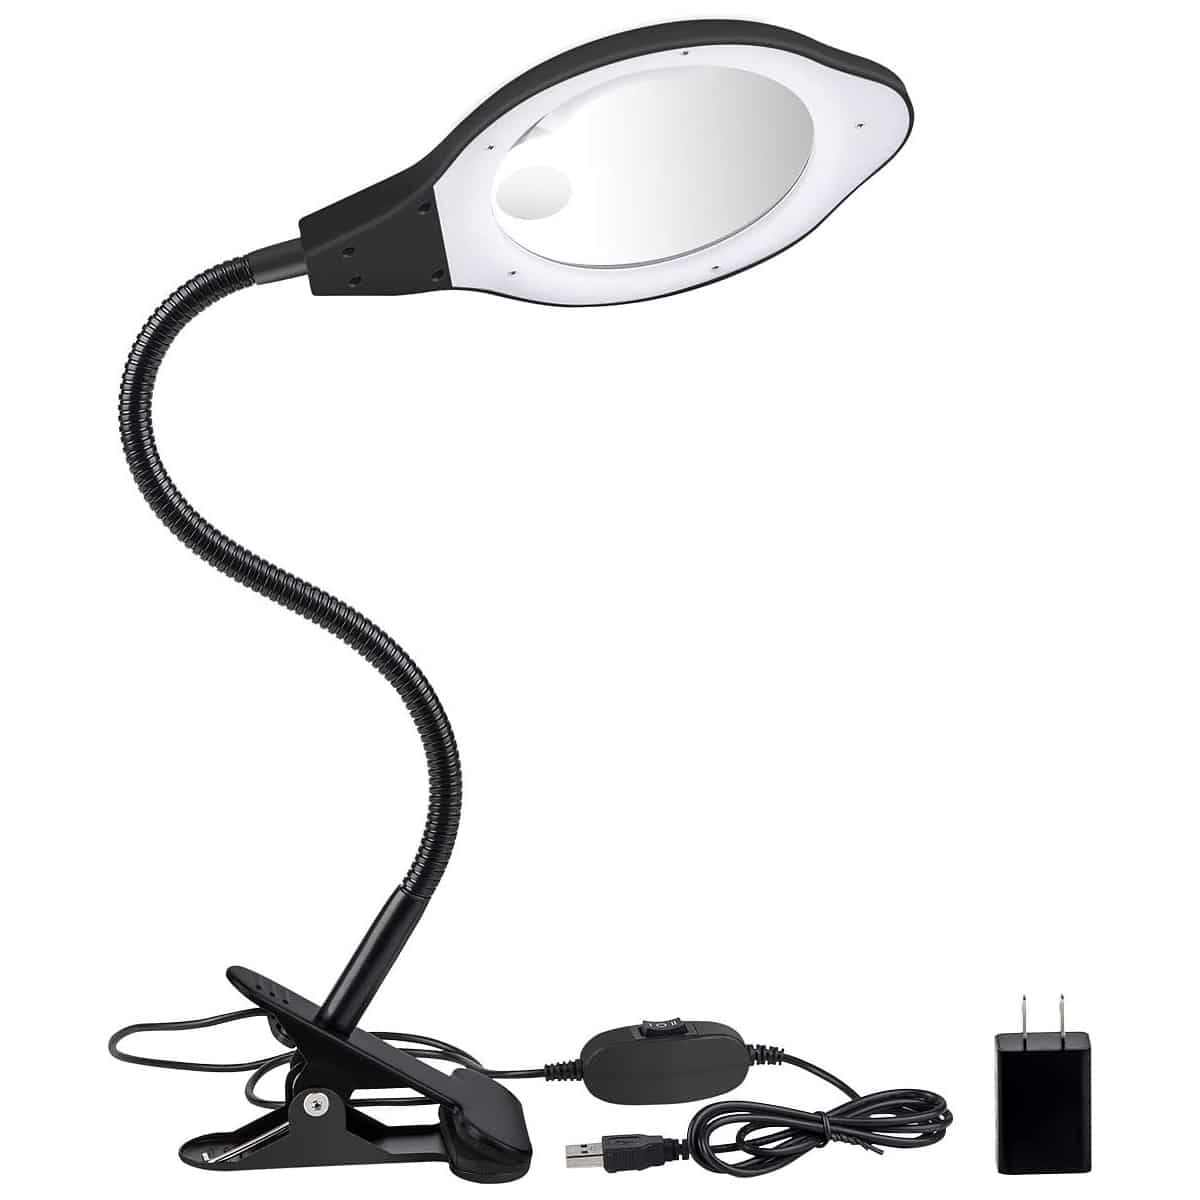 Dylviw Bright Desk Gooseneck Magnifier Lamp